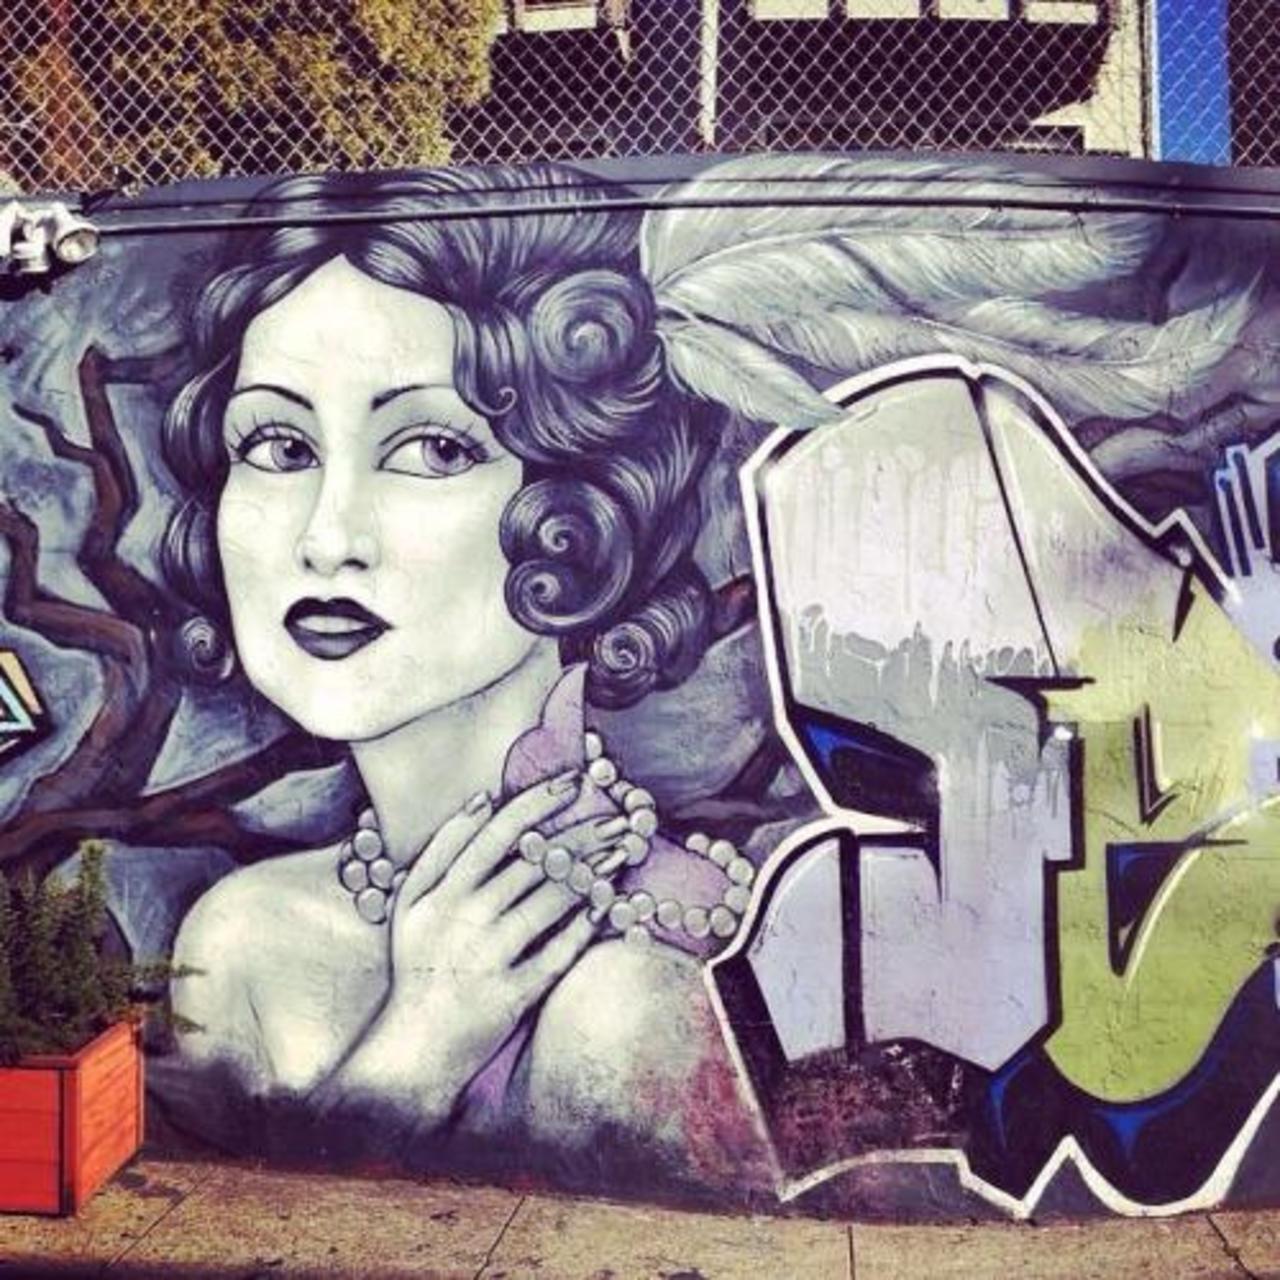 ##Streetart ##Sprayart ##Stencil ##Graffiti ... - #Mural - #ZangArt #Showcase - http://bit.ly/1NkwKN6 http://t.co/Znt5egPuqH